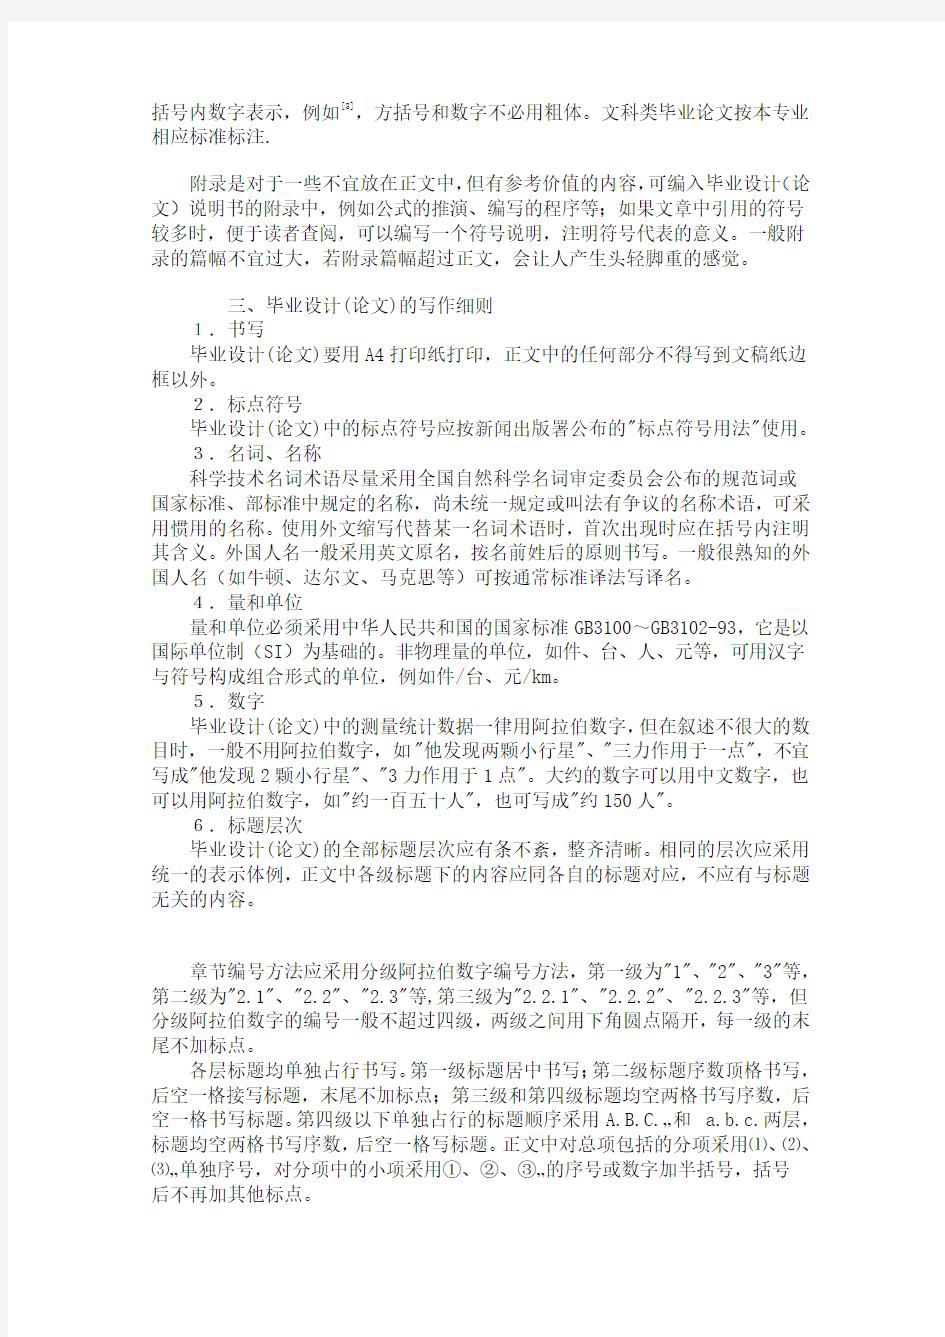 hg上海电力学院本科生毕业设计(论文)撰写规范